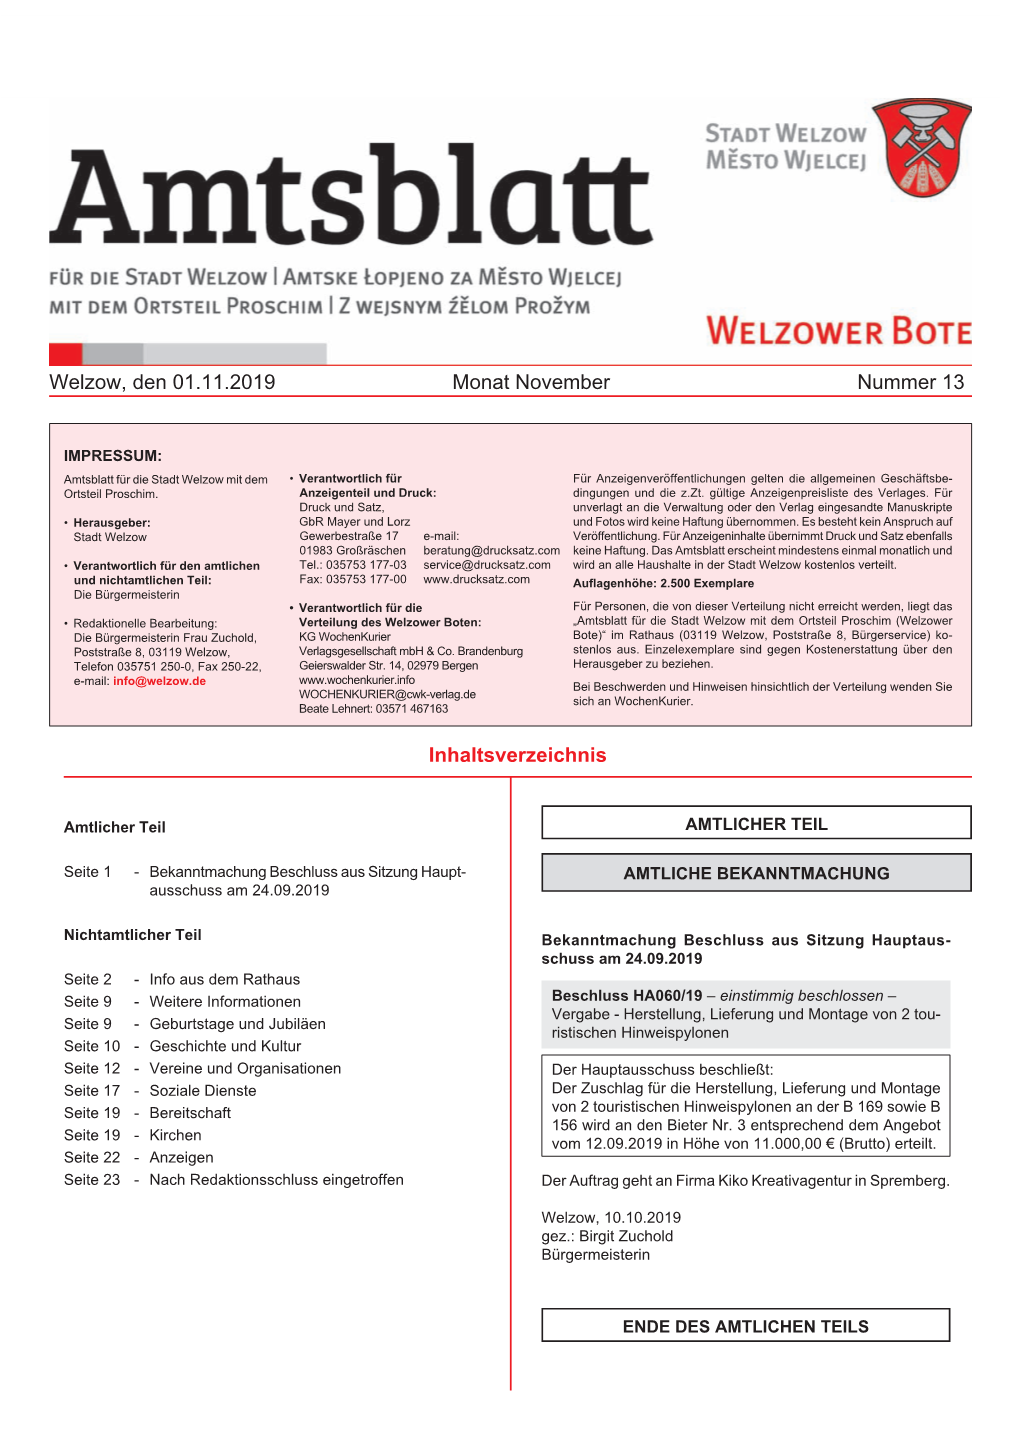 Amtsblatt November 2019 (2,9 Mib)